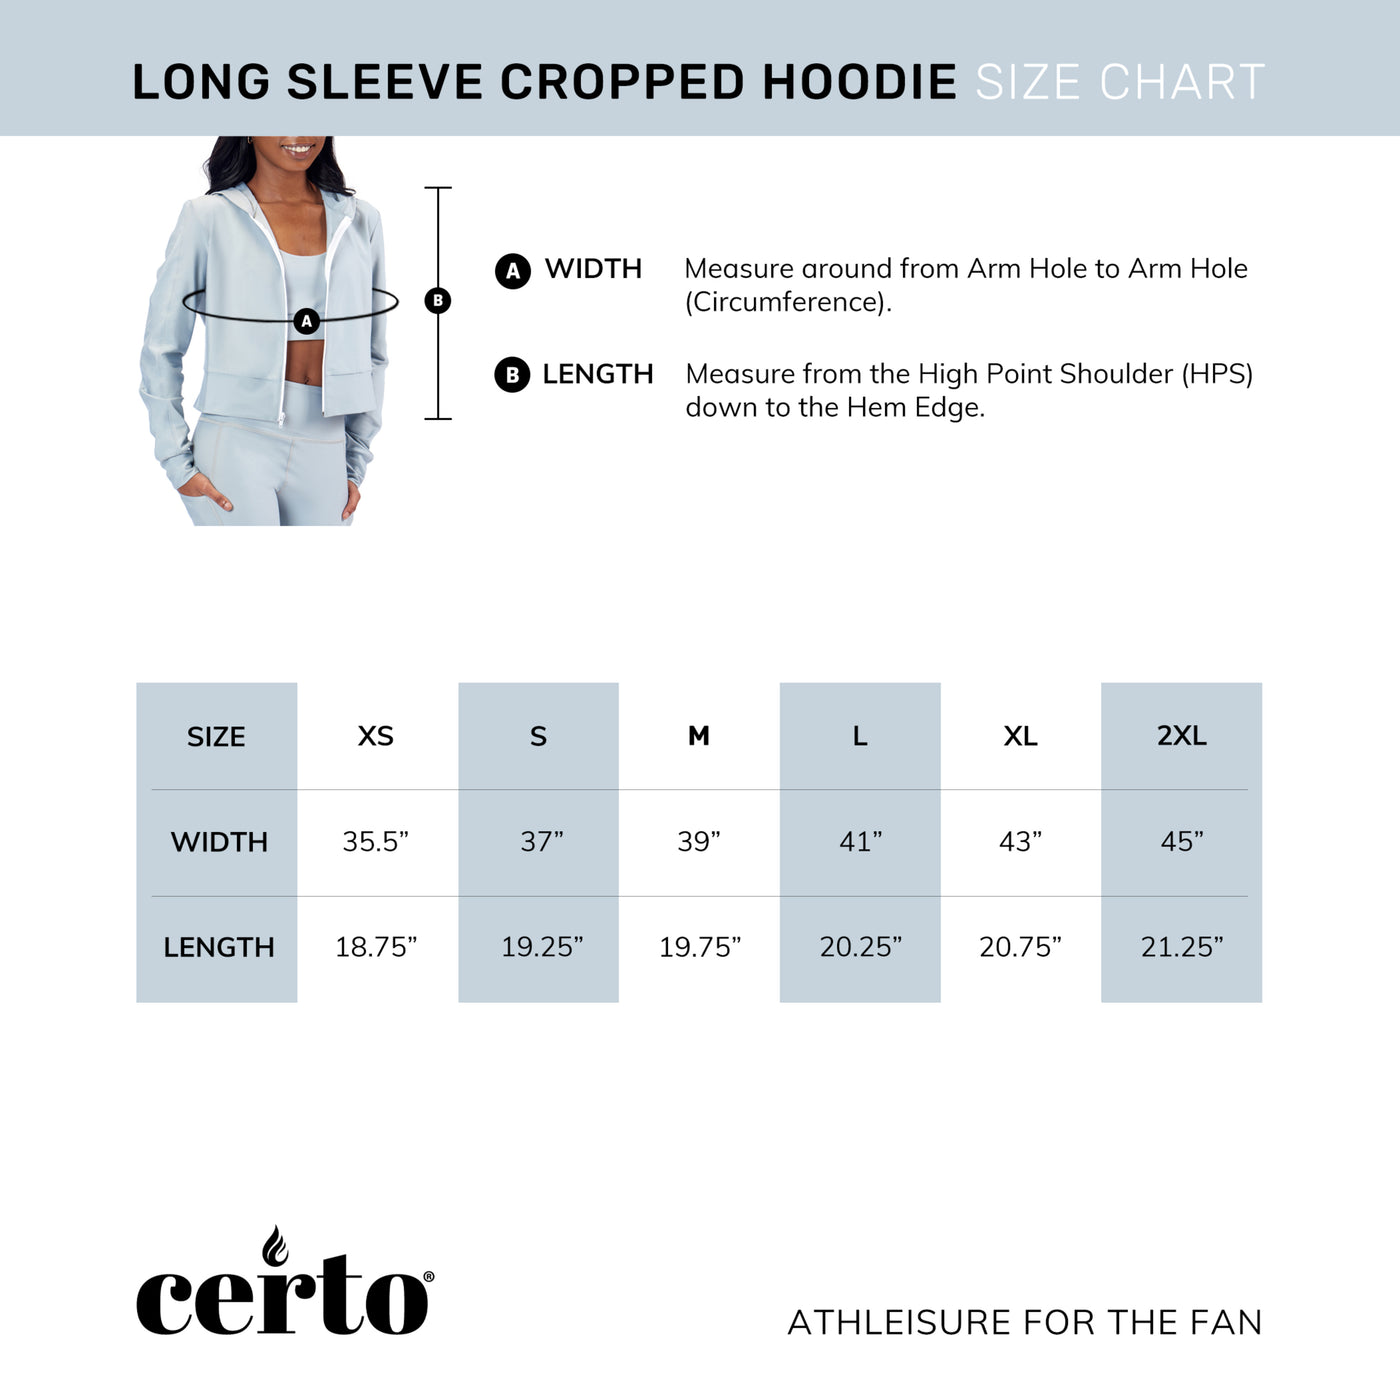 ASU Crop Zip Hoodie size chart for sizes XS through 2XL